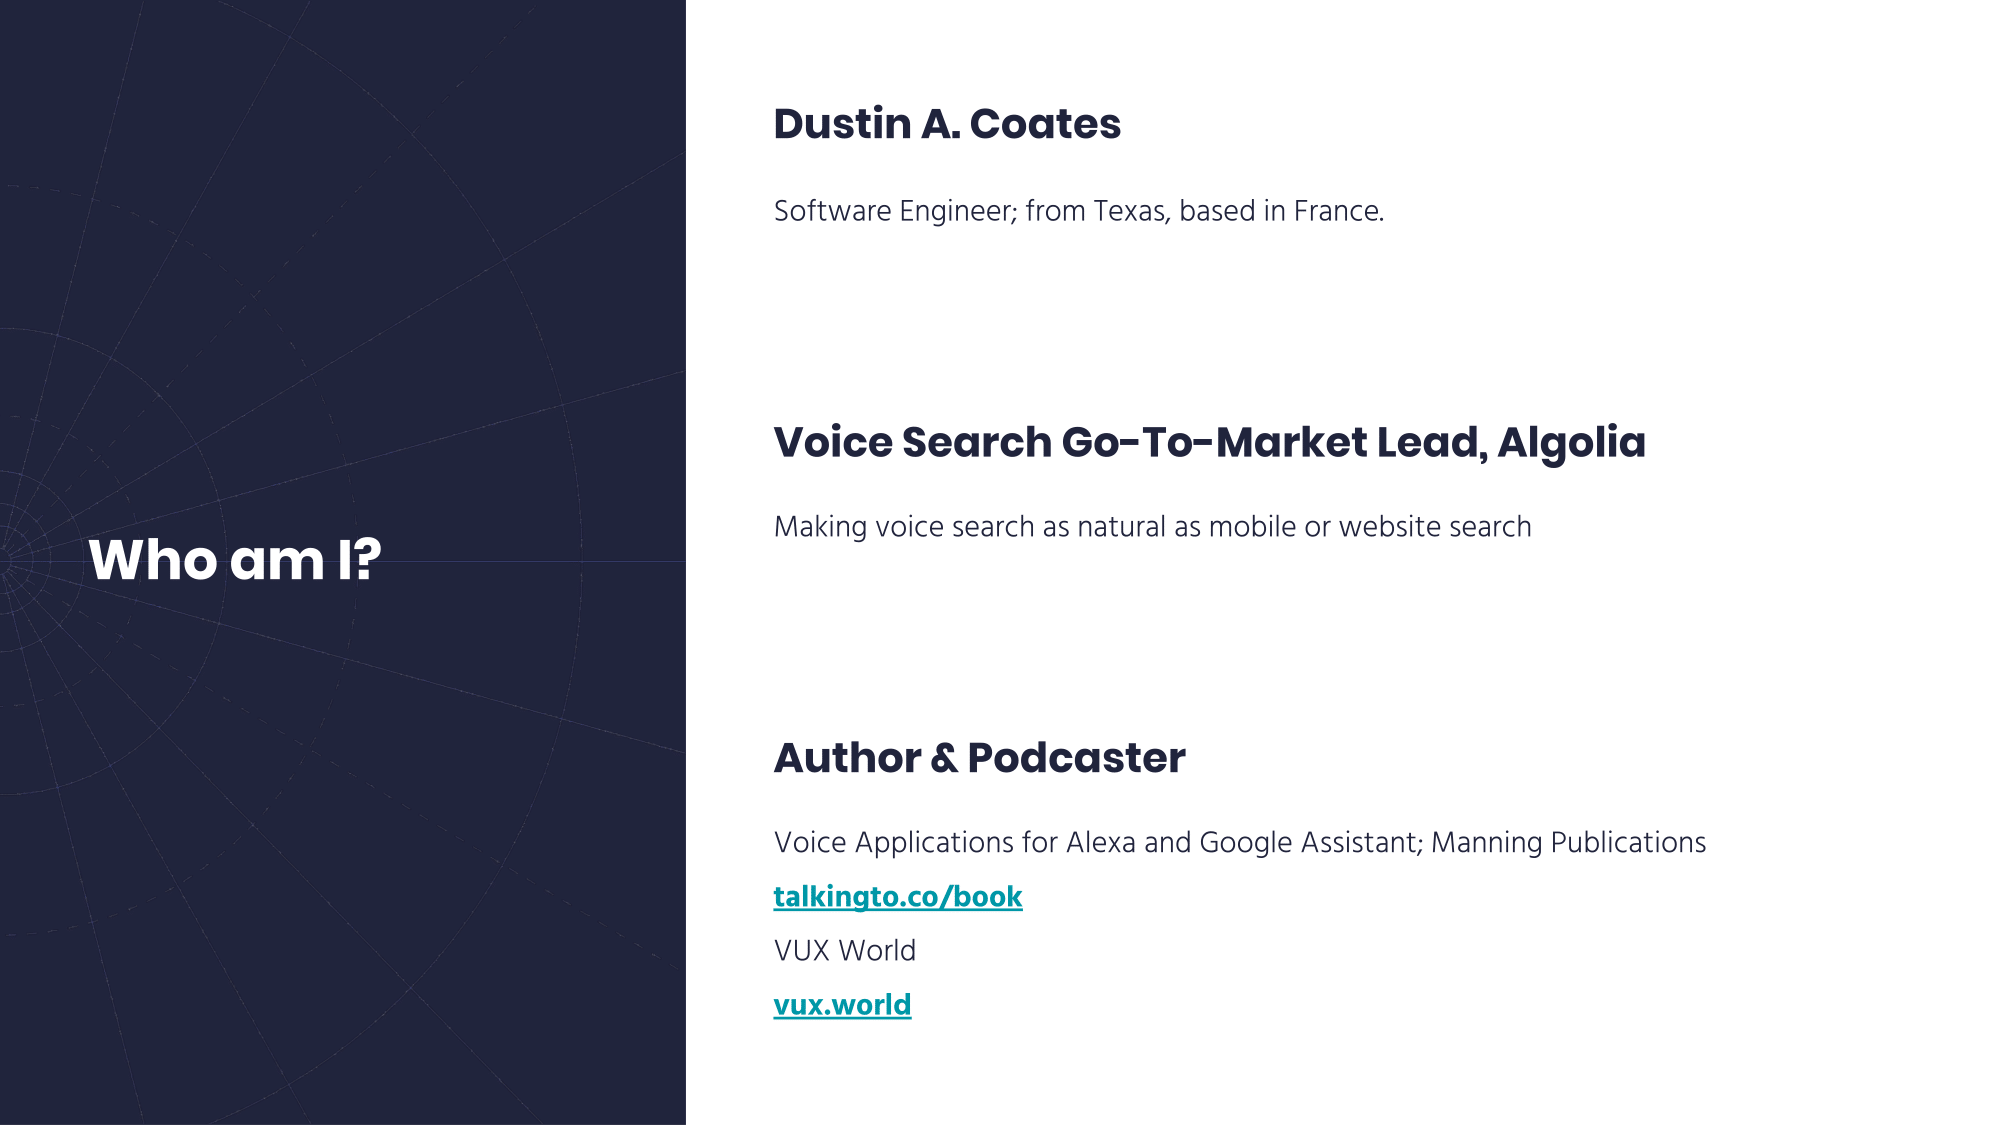 Dustin Coates, Voice Search at Algolia